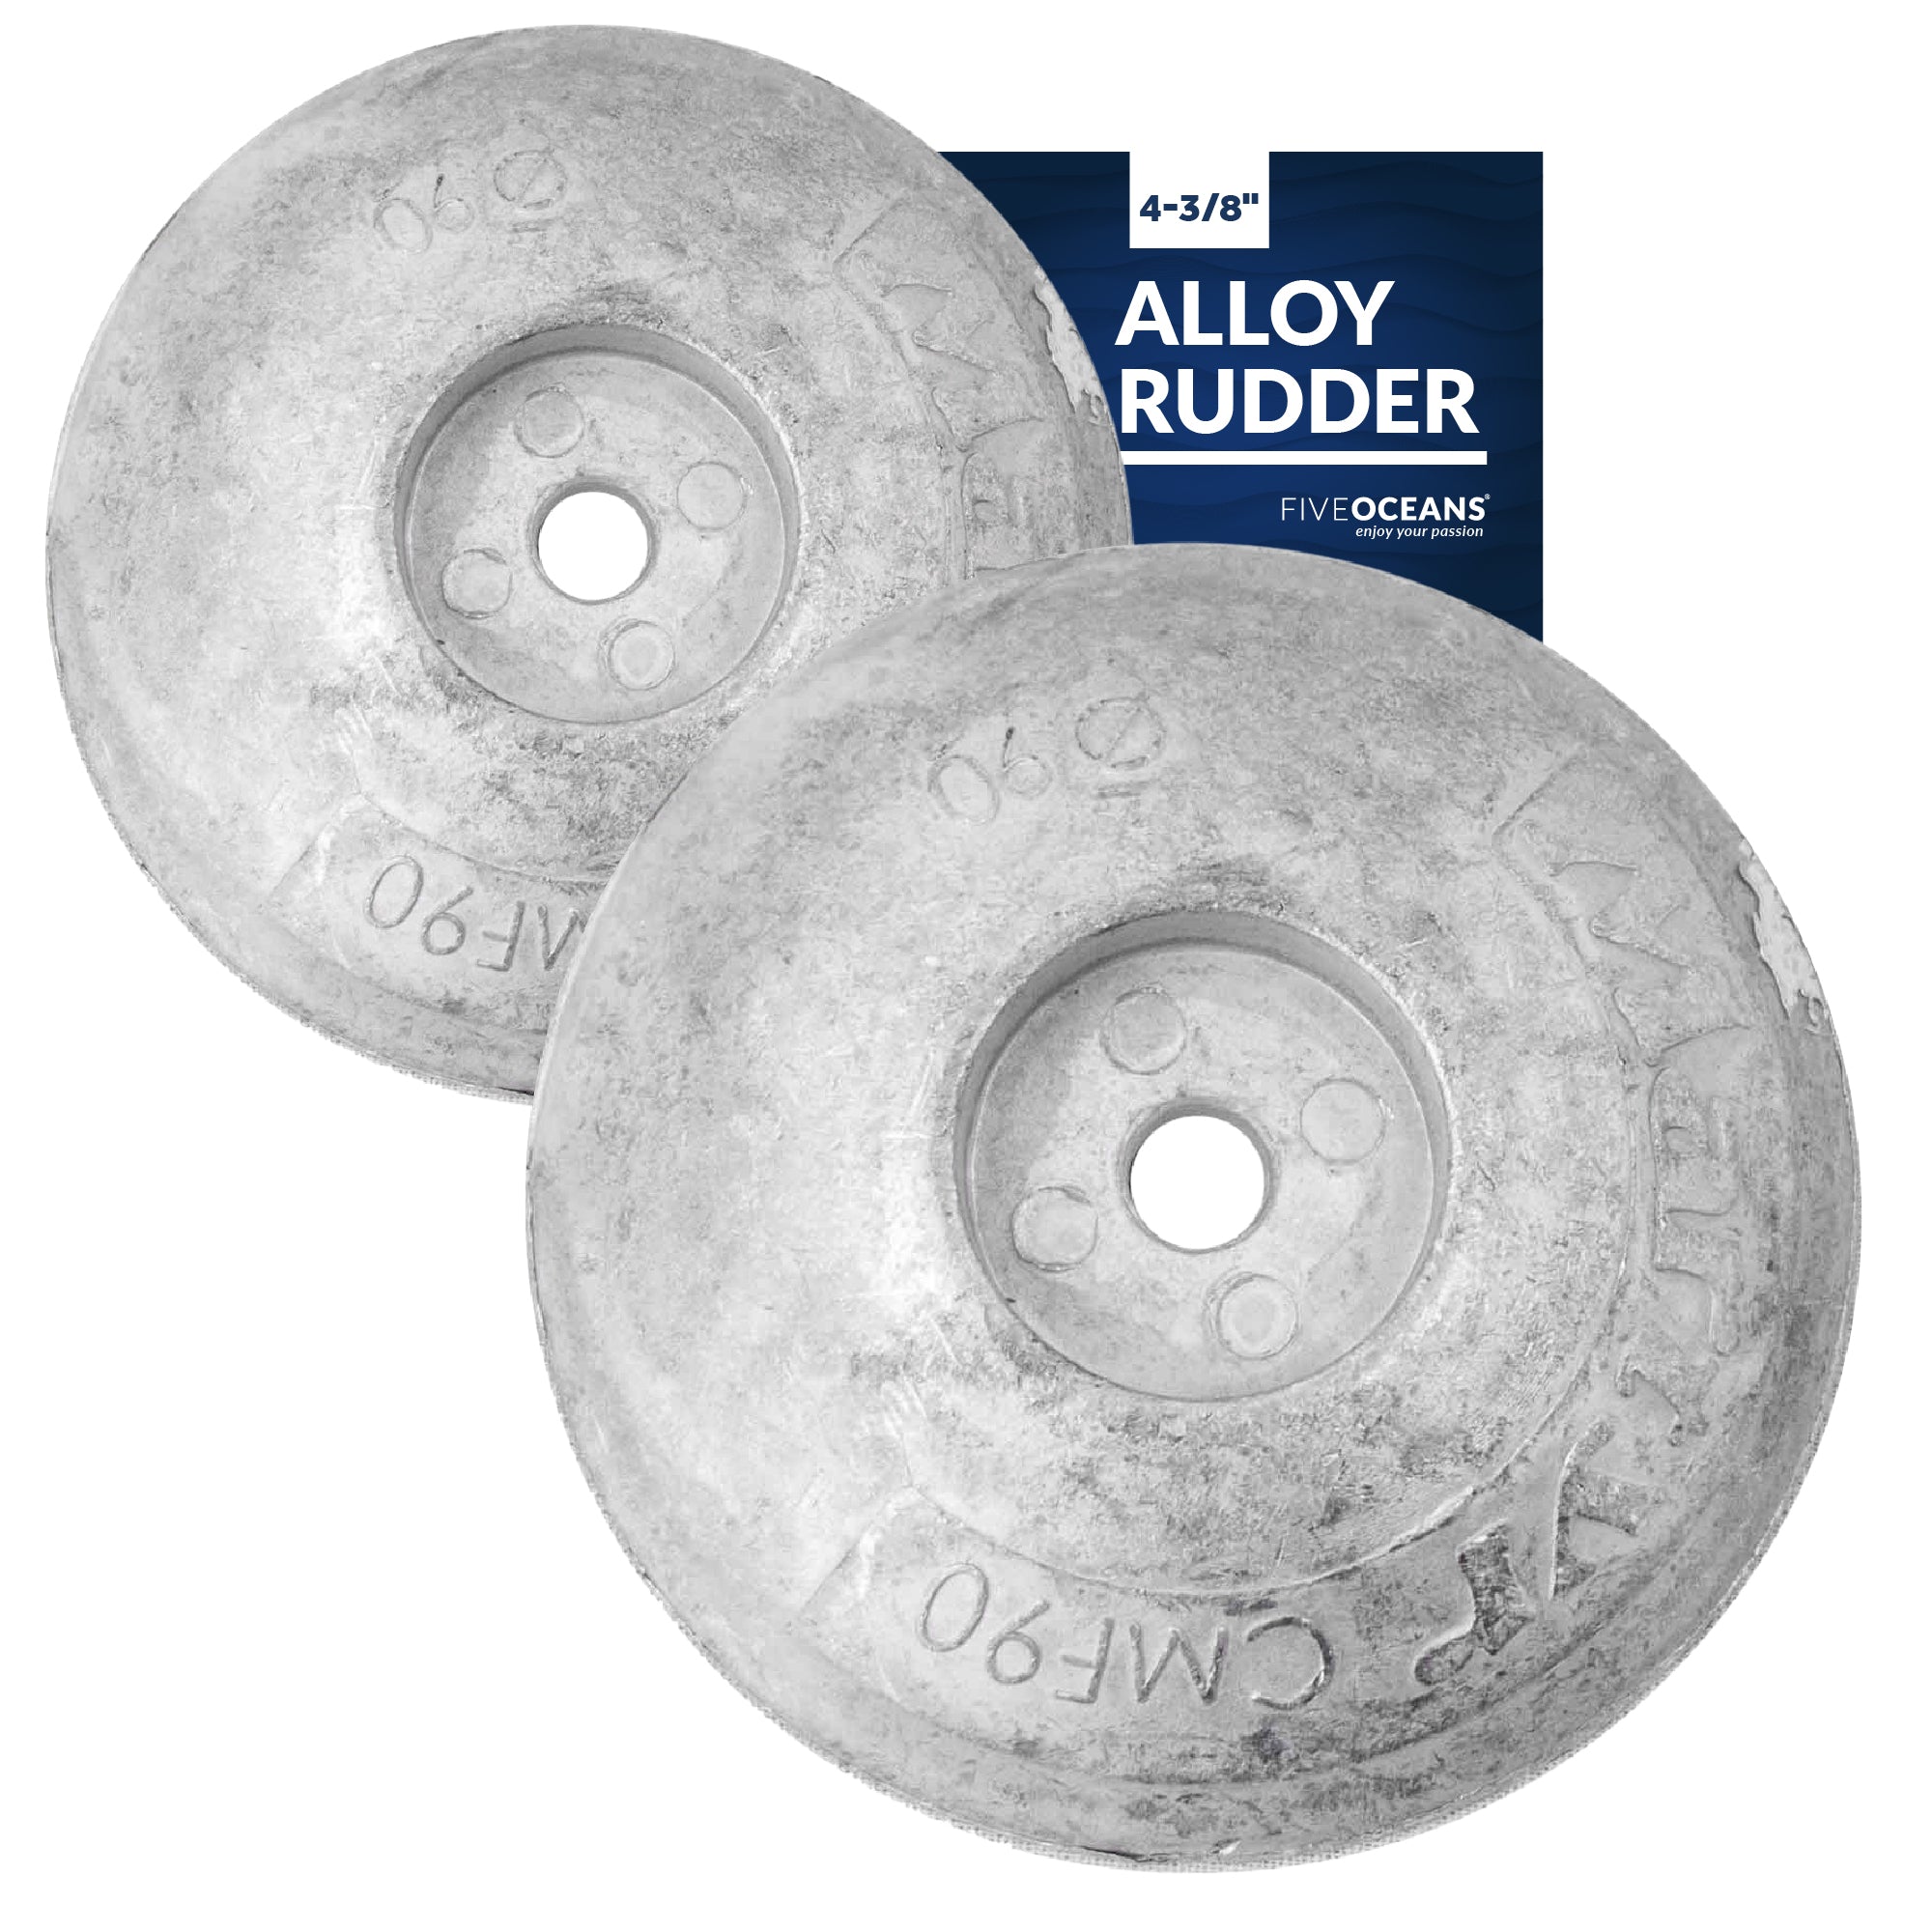 Alloy Rudder/Trim Tab Disc Anode, Zinc, 4-3/8", 2-pack - FO4176-M2